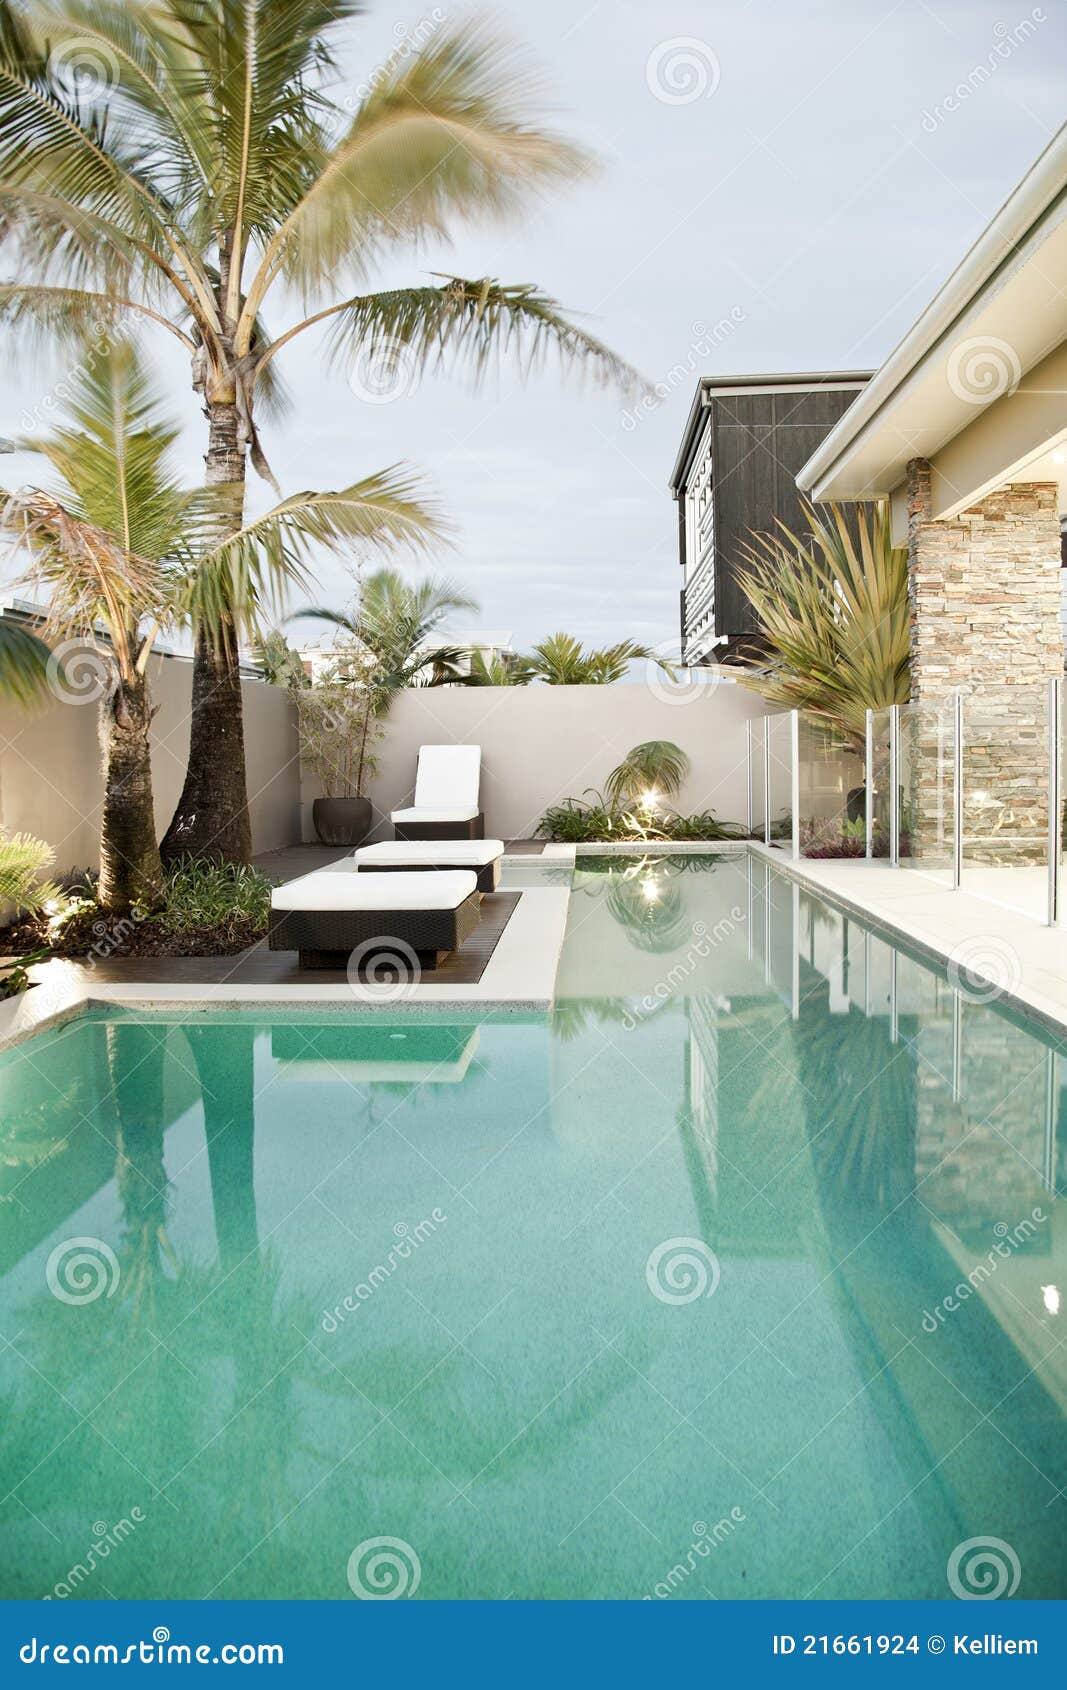 villa and swimming pool